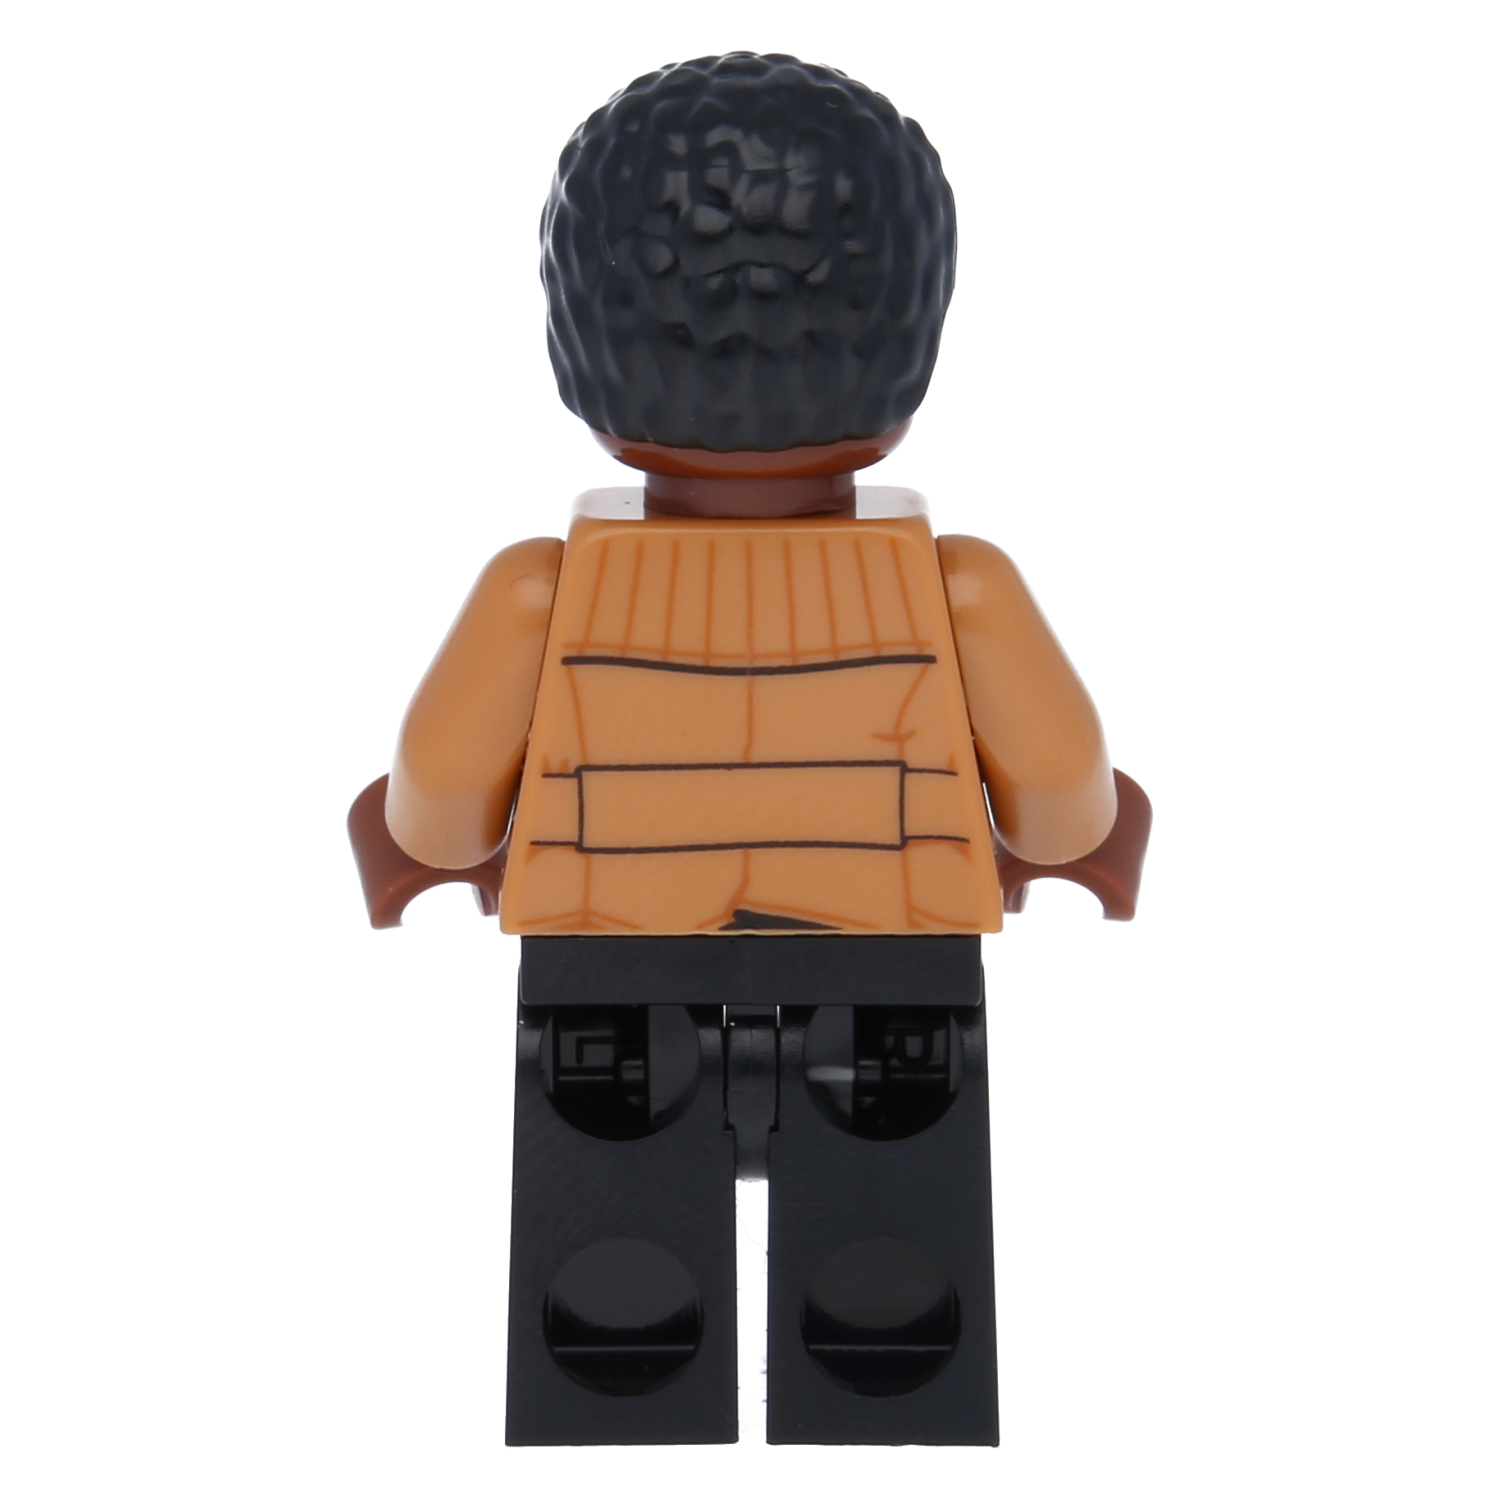 LEGO Star Wars Minifigure - Finn